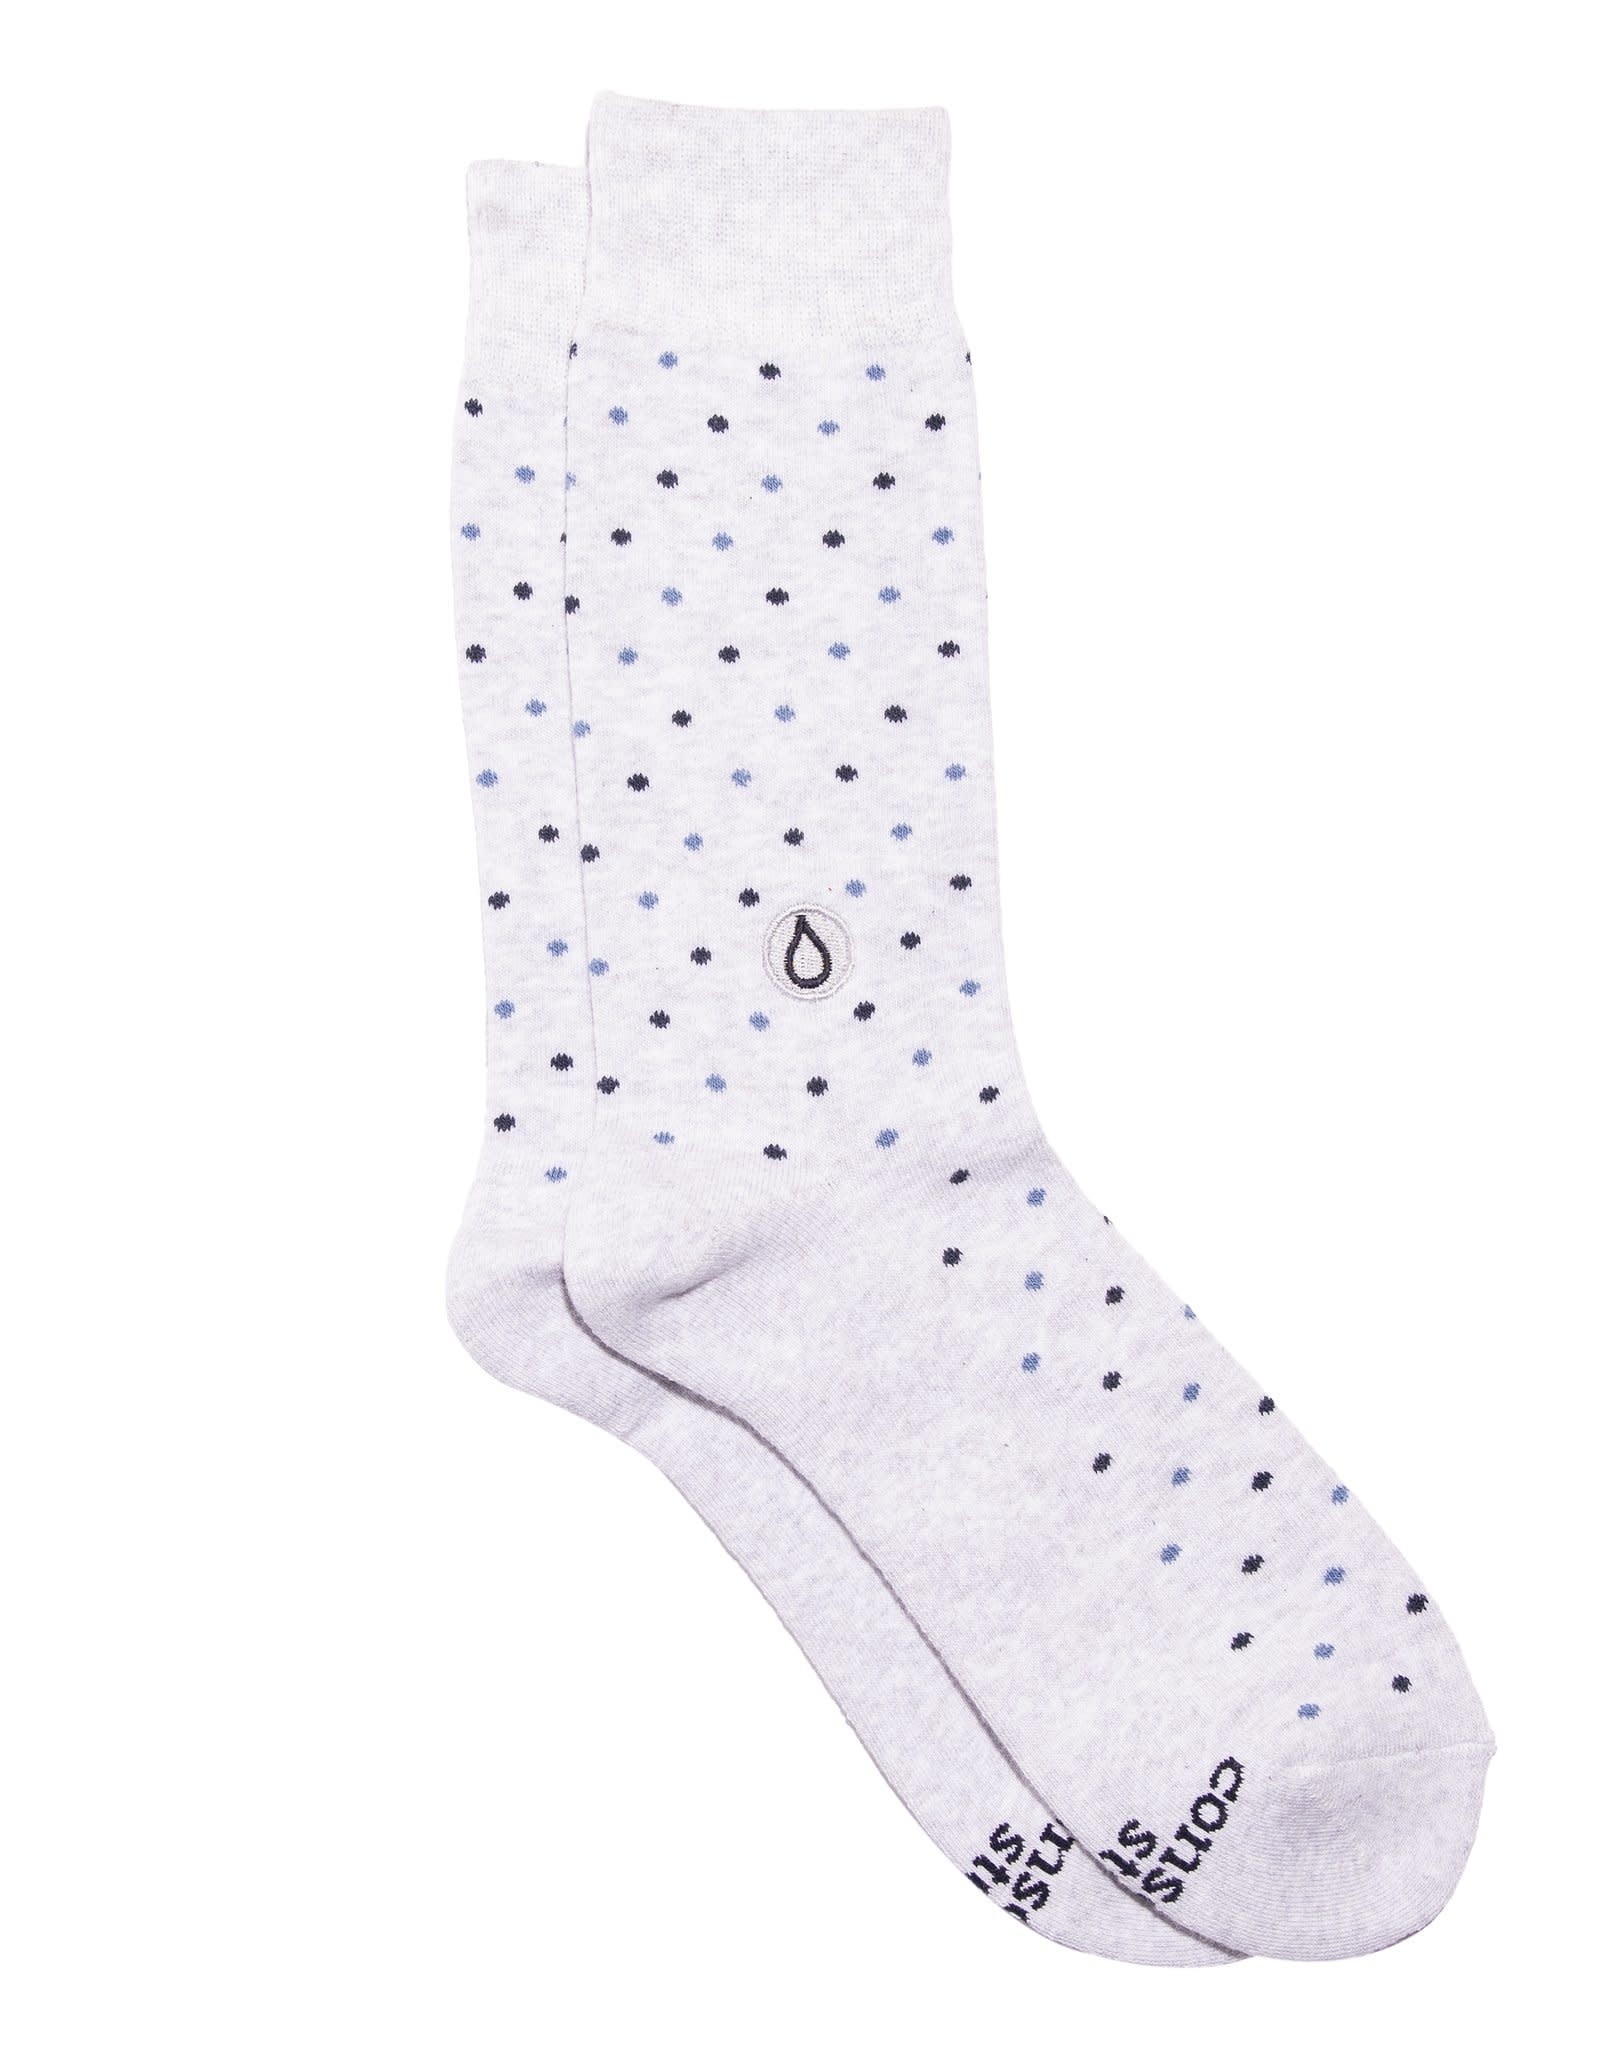 Conscious Step Socks That Give Water - Polka Dot